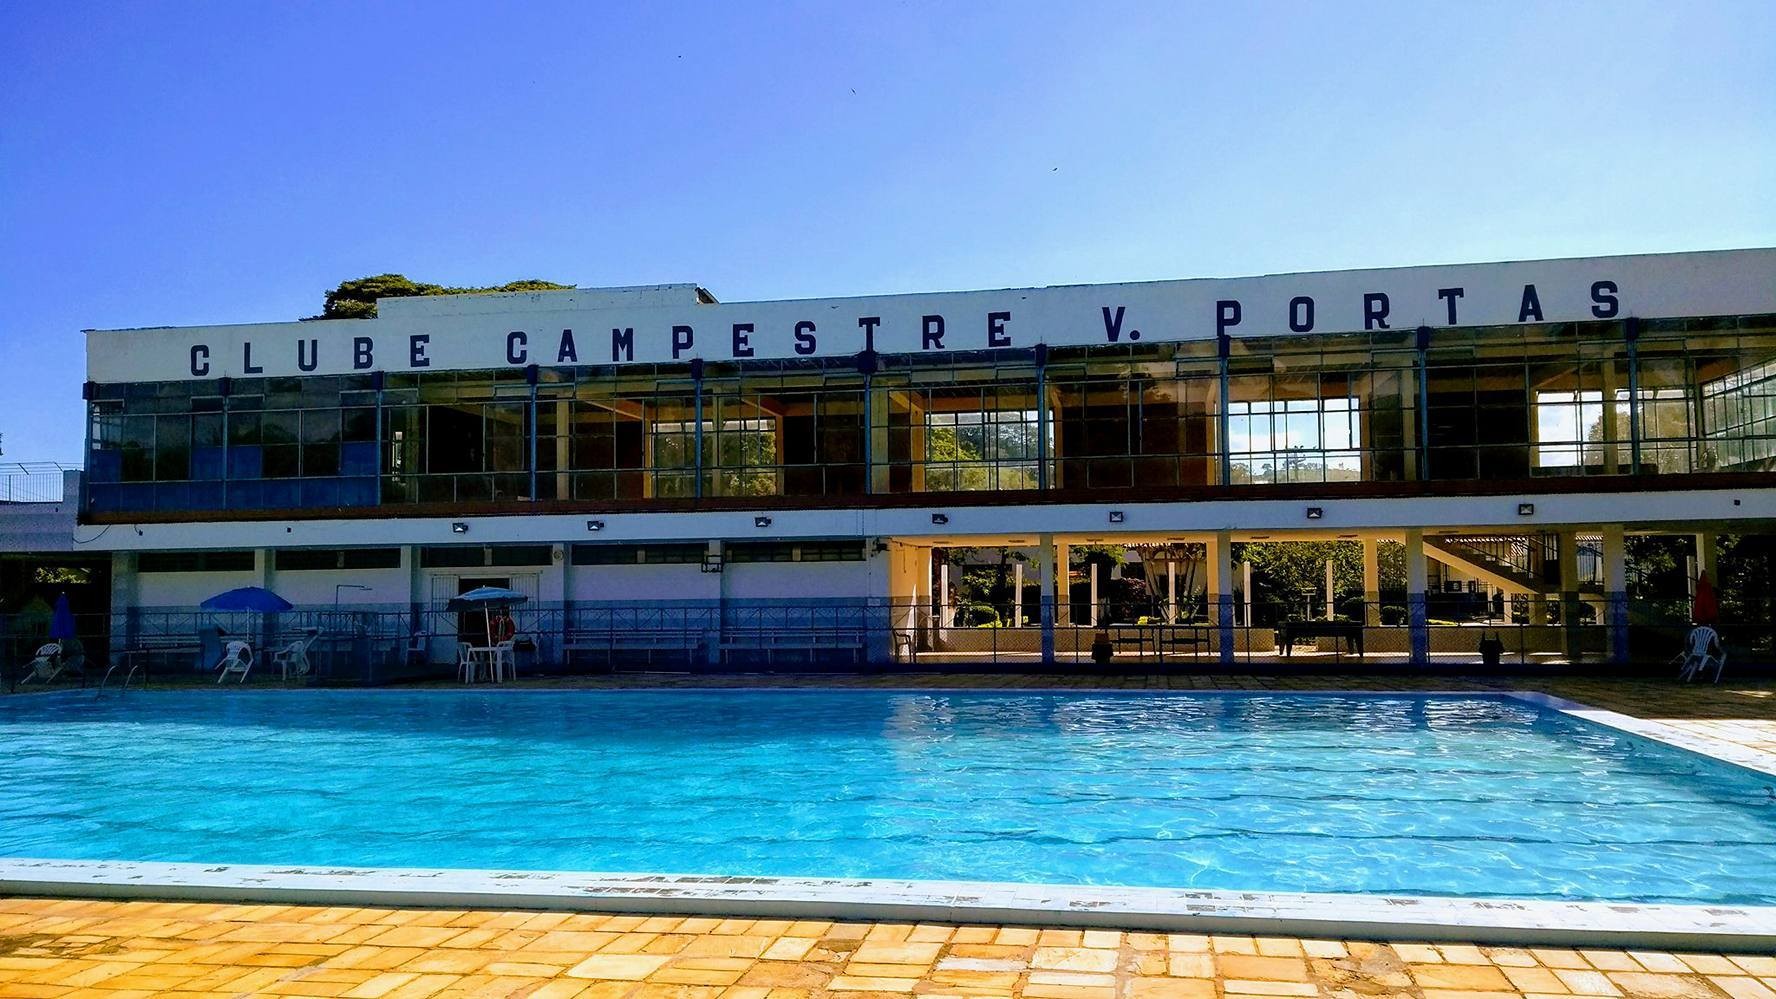 Photos at AGEPOL - Swimming Pool in Brasília